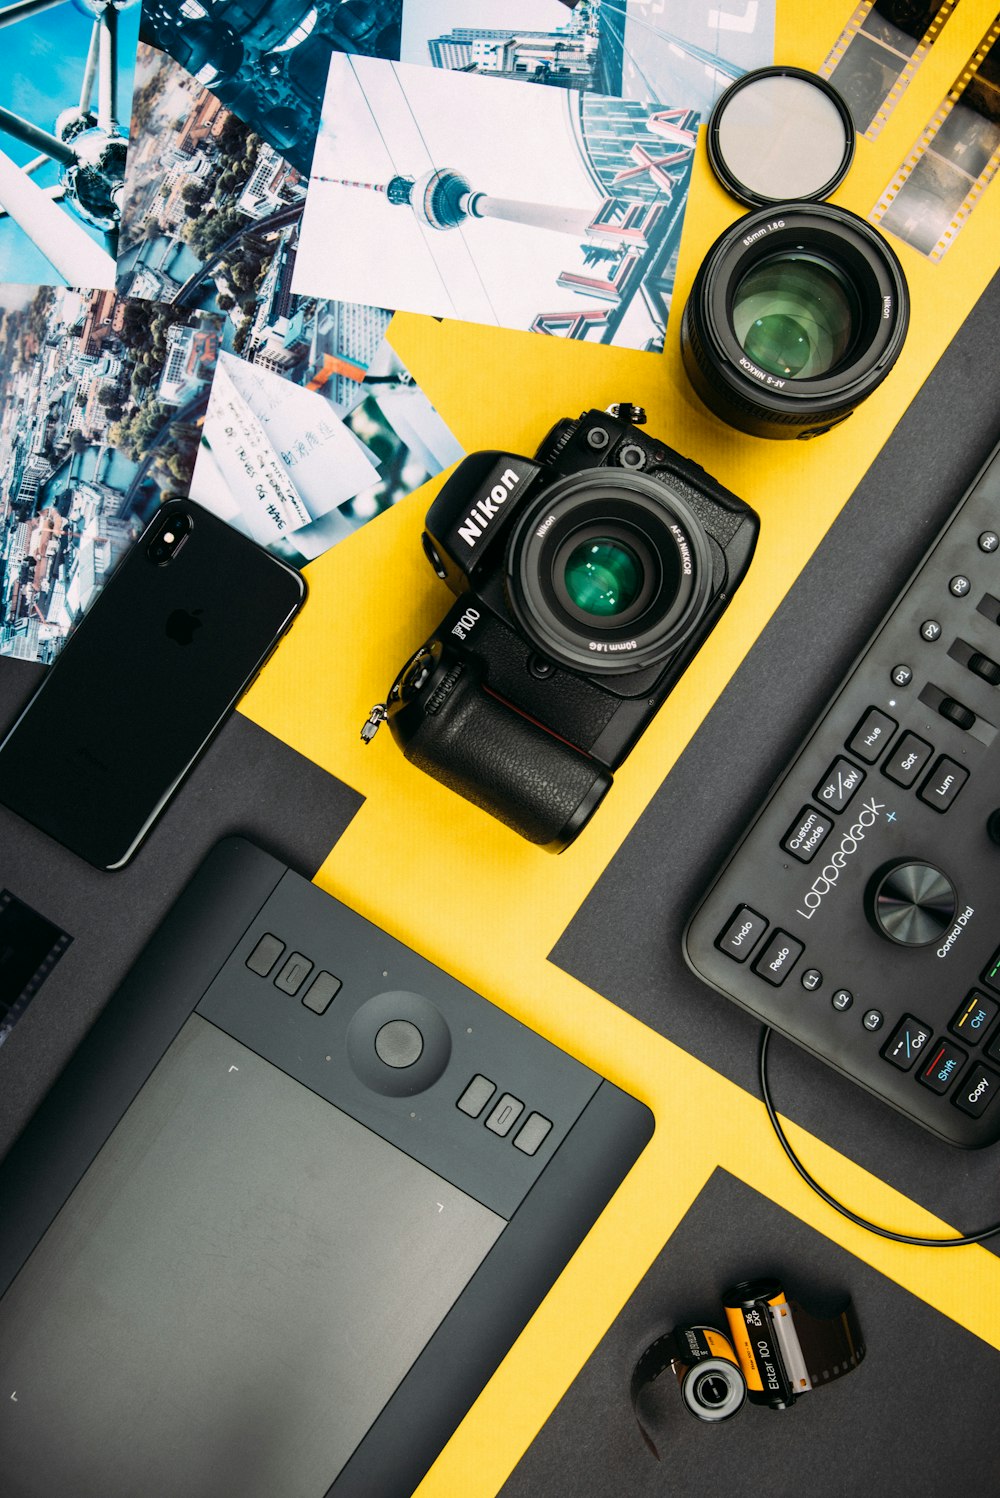 cámara DSLR Nikon negra junto al iPhone X gris espacial